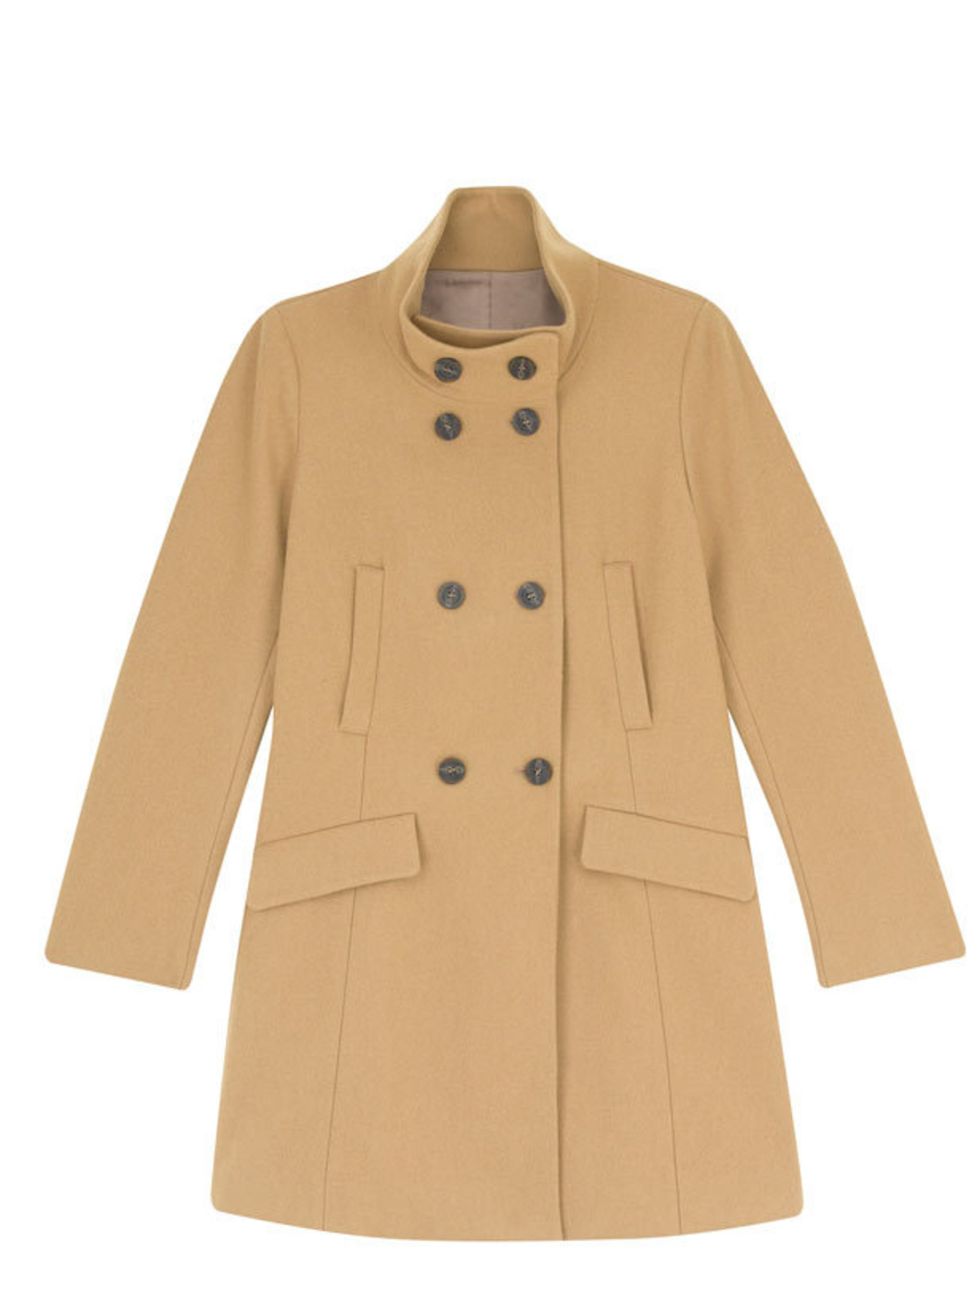 <p><a href="http://shop.uniqlo.com/uk/goods/066213">Uniqlo</a> wool stand collar coat, £79.99</p>